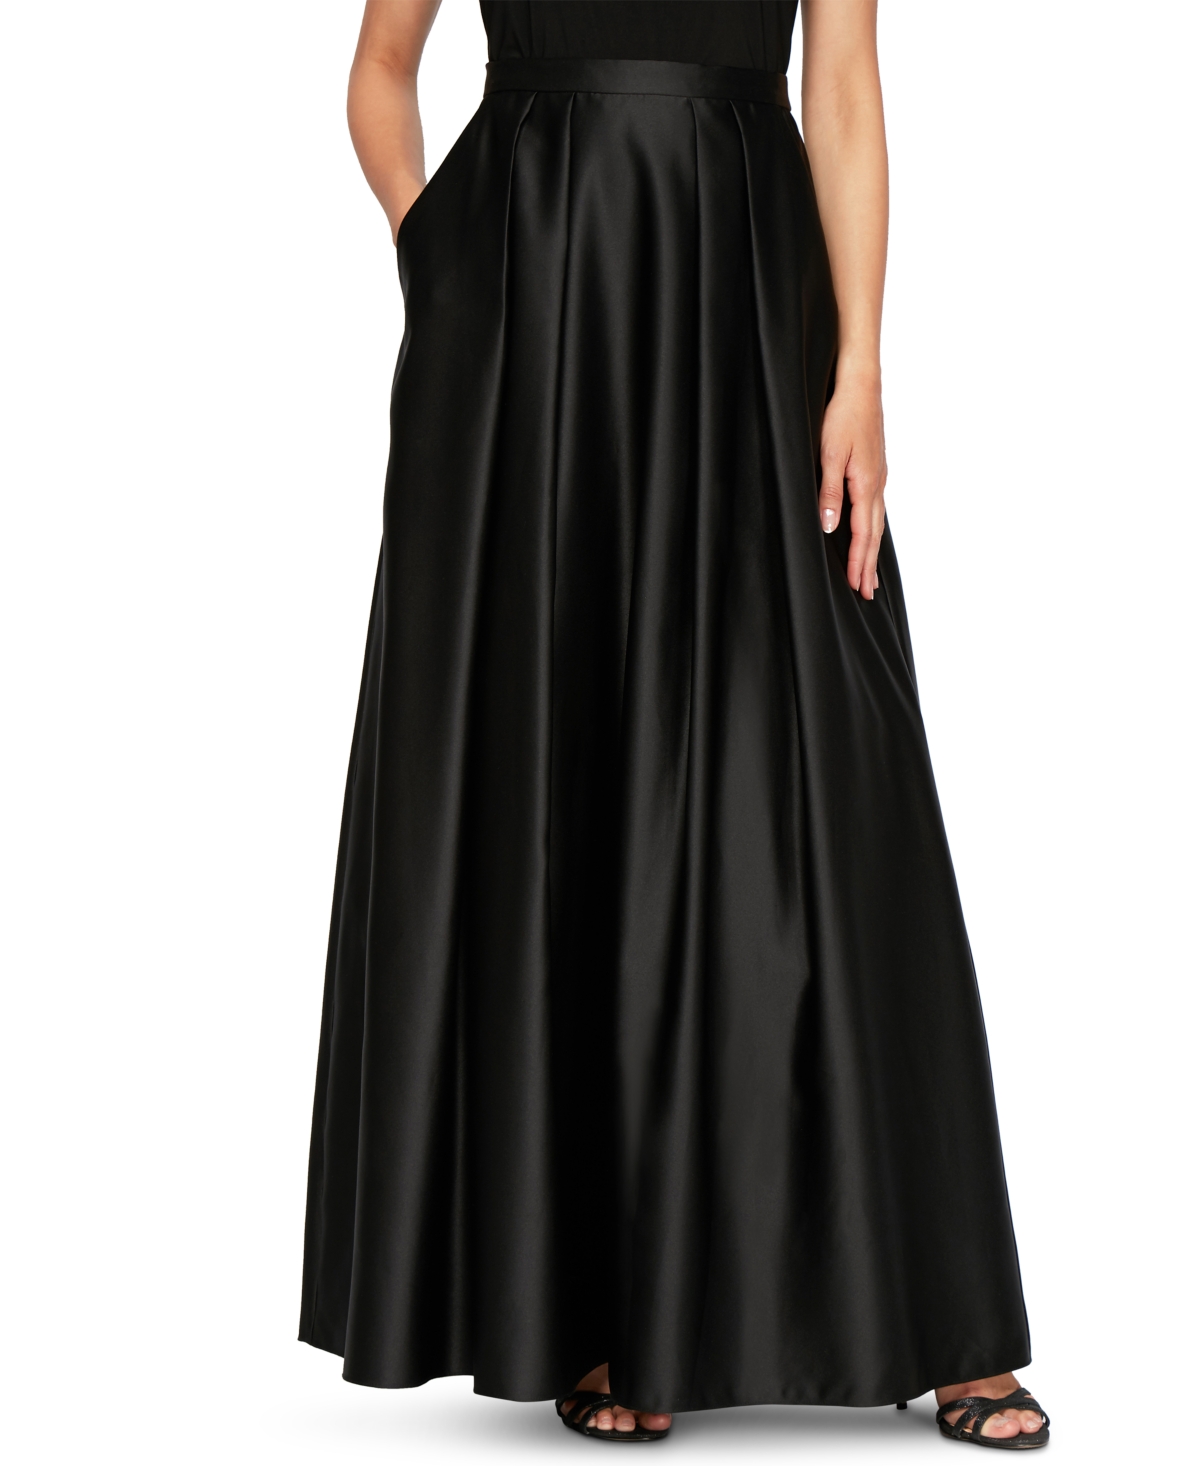 Pocketed Ballgown Skirt - Black